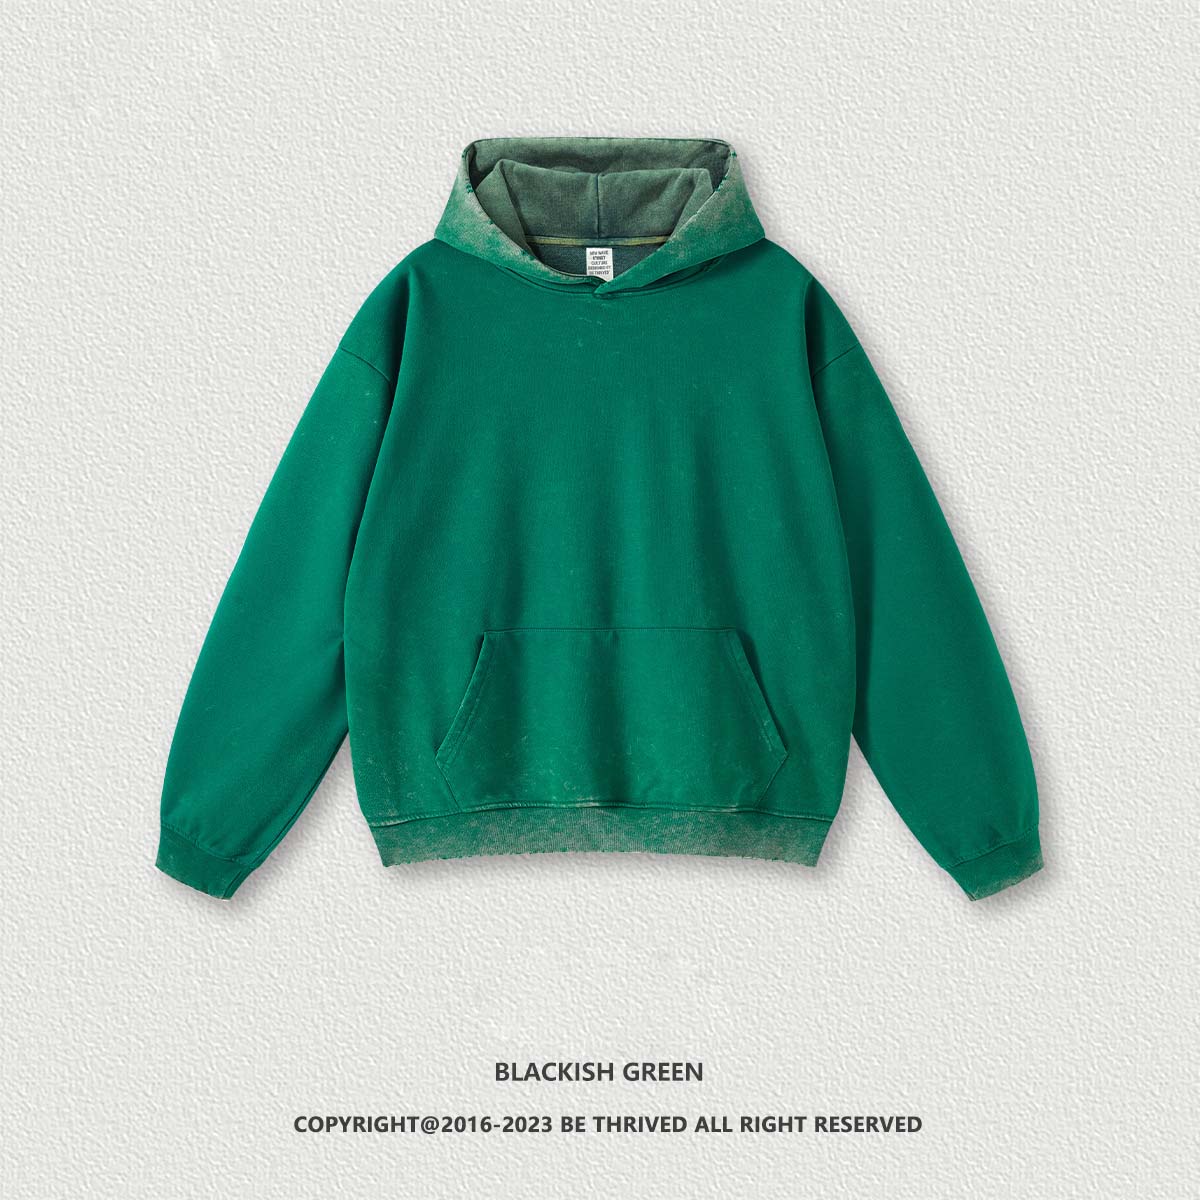 W0151 455sgm American fashion brand heavy washed waste soil short sweatshirt men's loose casual hoodie